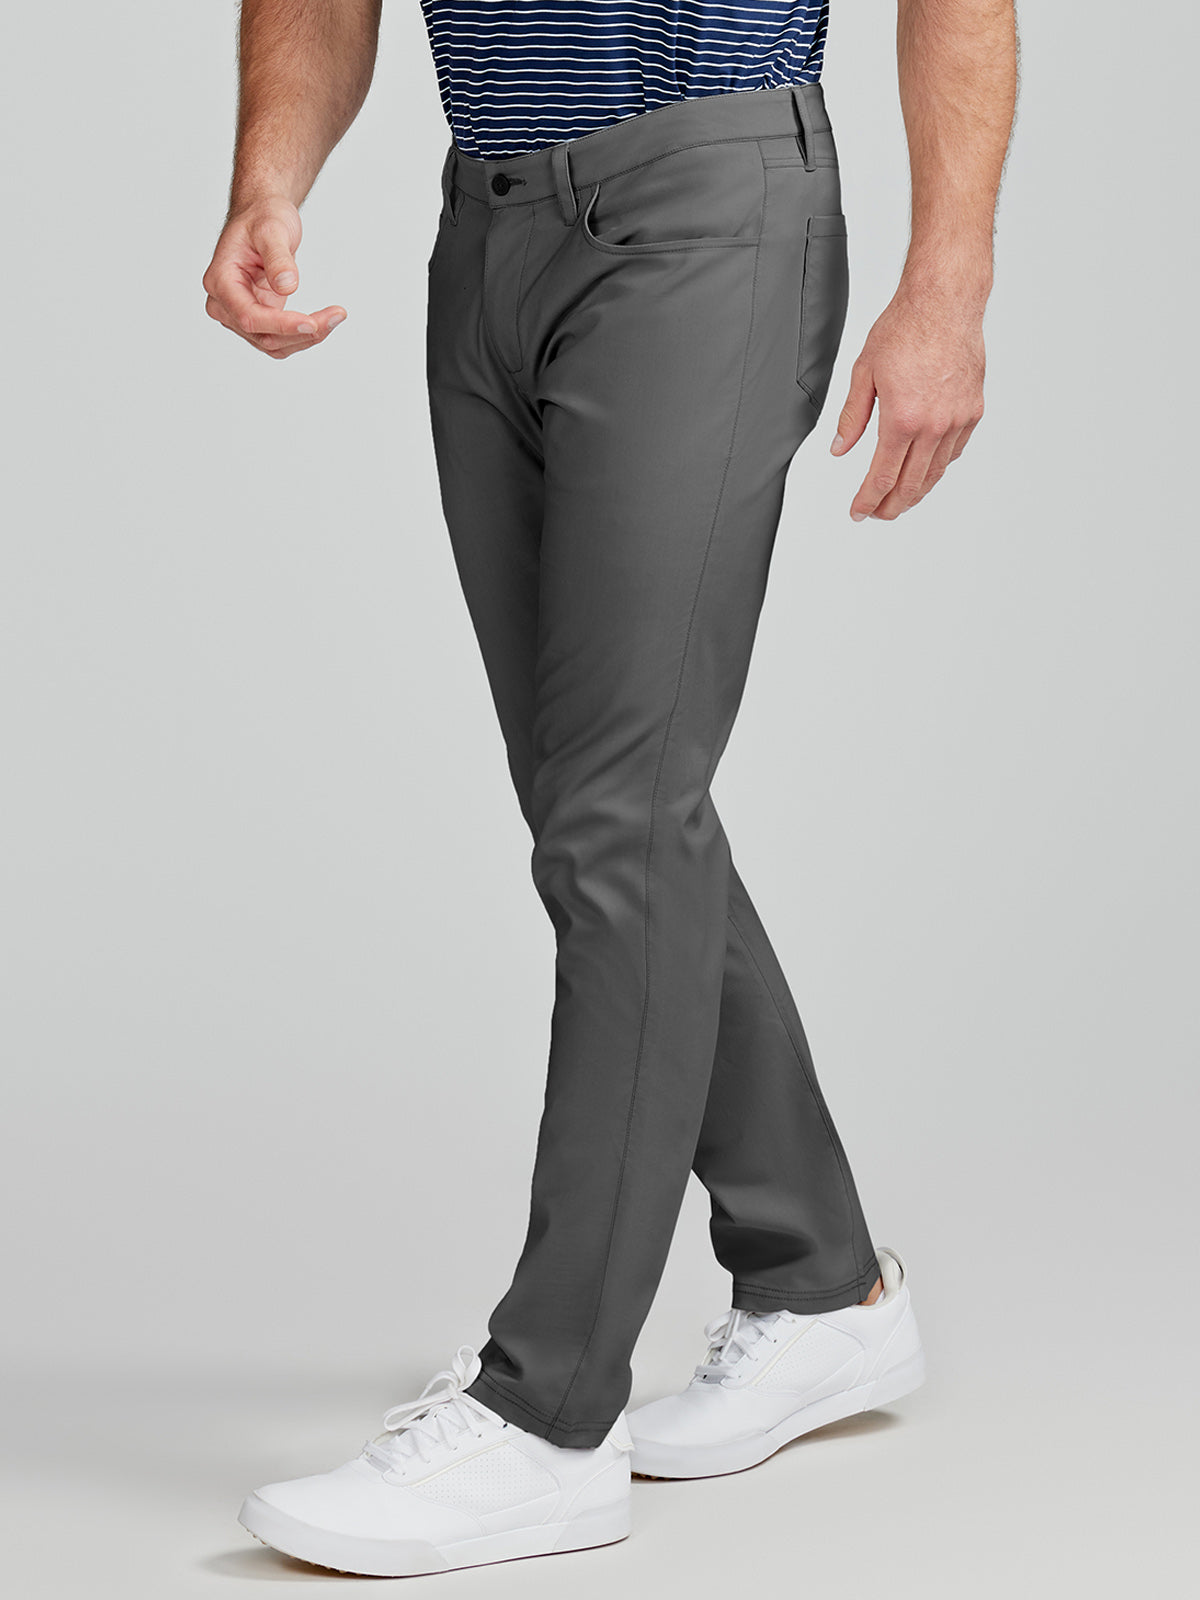 Bat Black Jogging Trouser Print Narrow Bottom Slim Fit Trousers Gym Casual  Sweat pants For Men